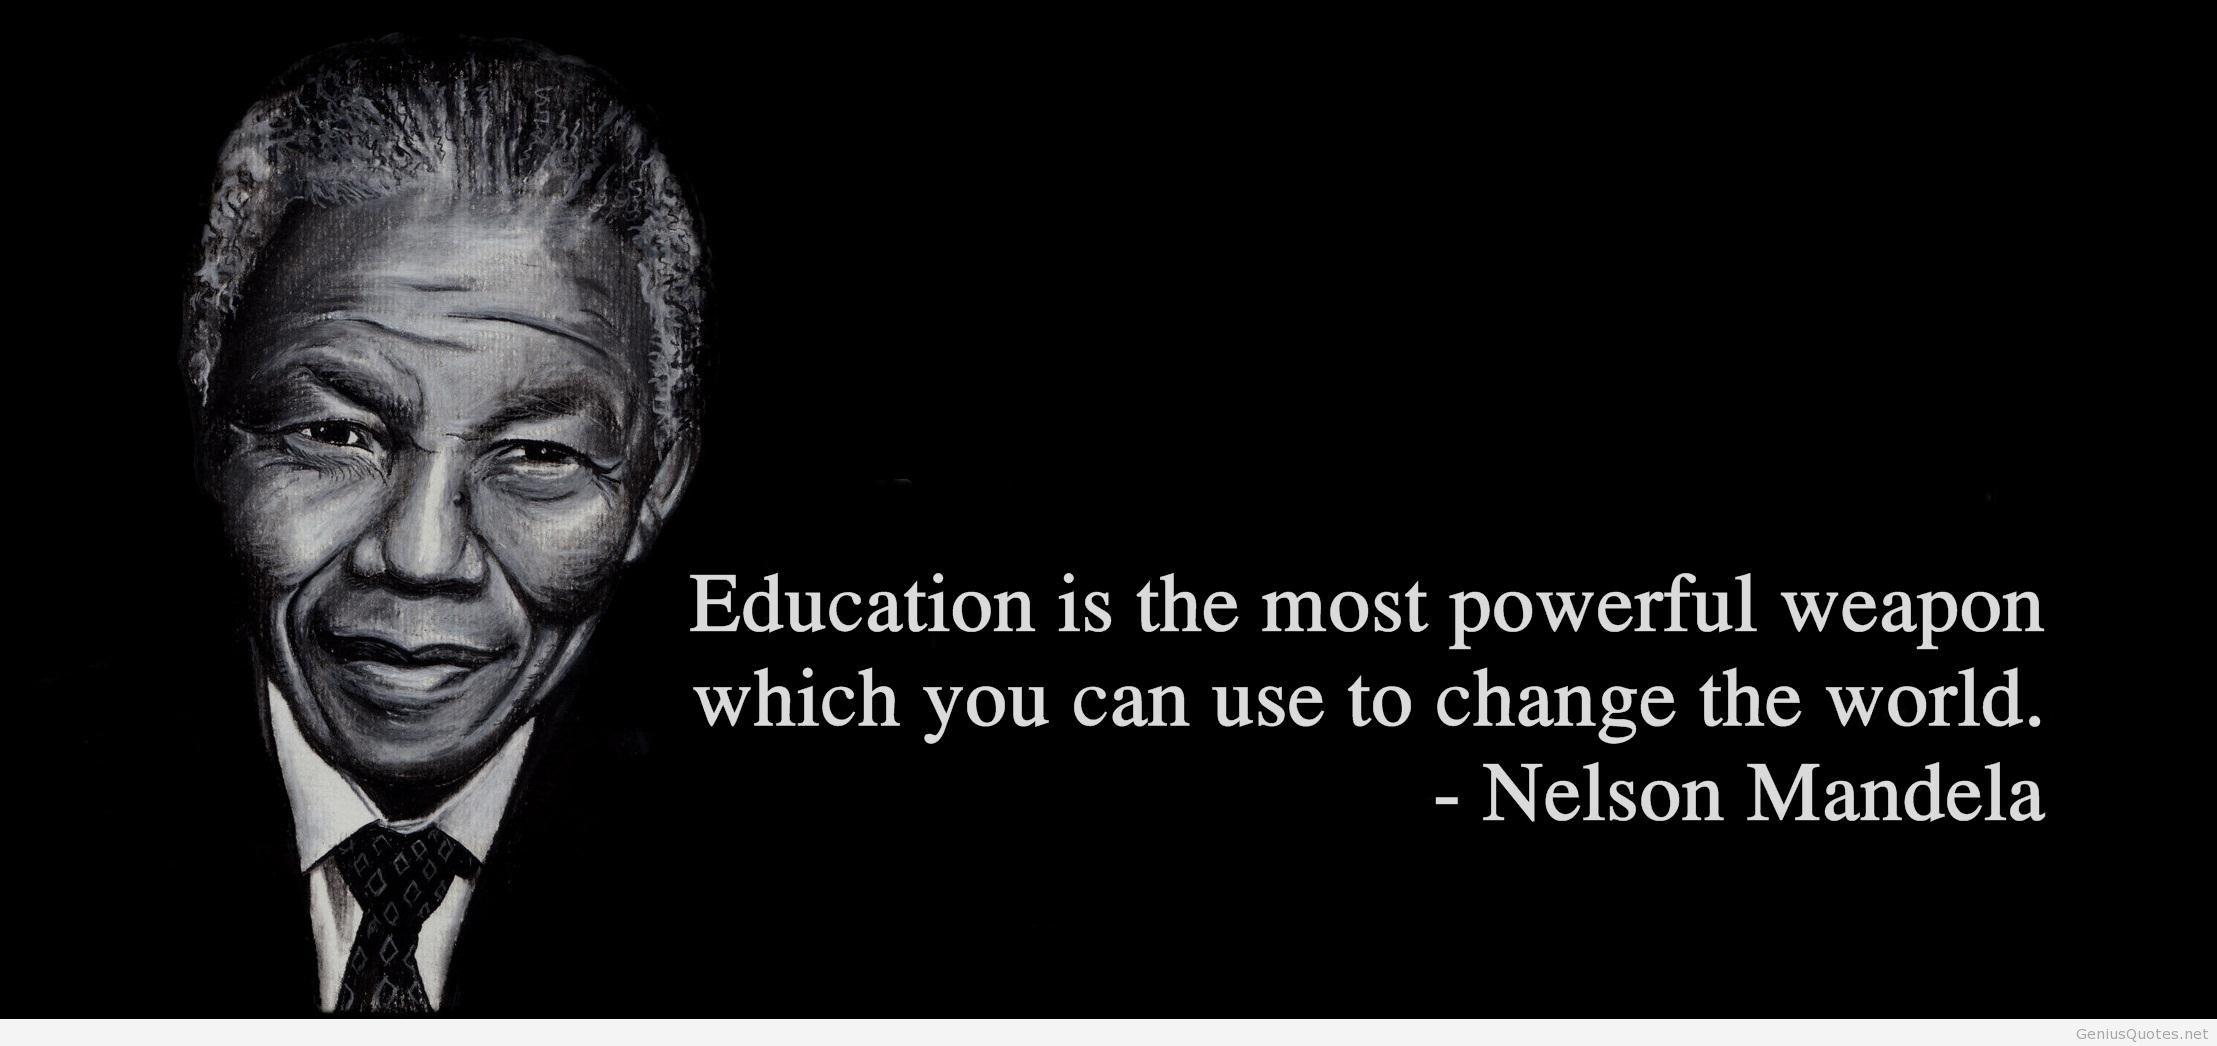 Happy Nelson Mandela Day Quotes Sayings Image Whatsapp Status 2019